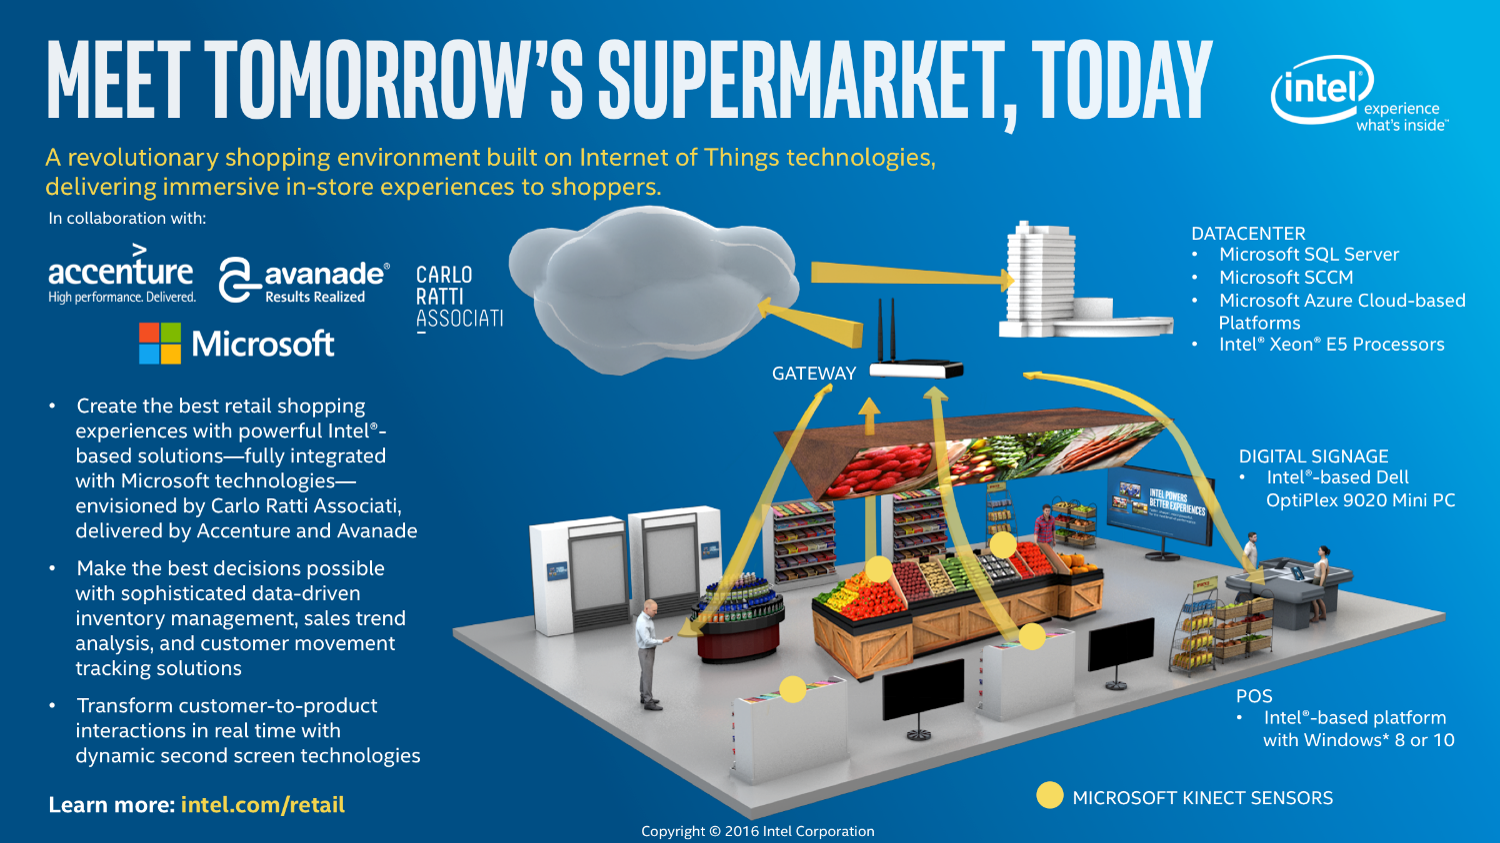 Supermarket_Retail_Microsoft-Envision-2016_Intel-Infographic